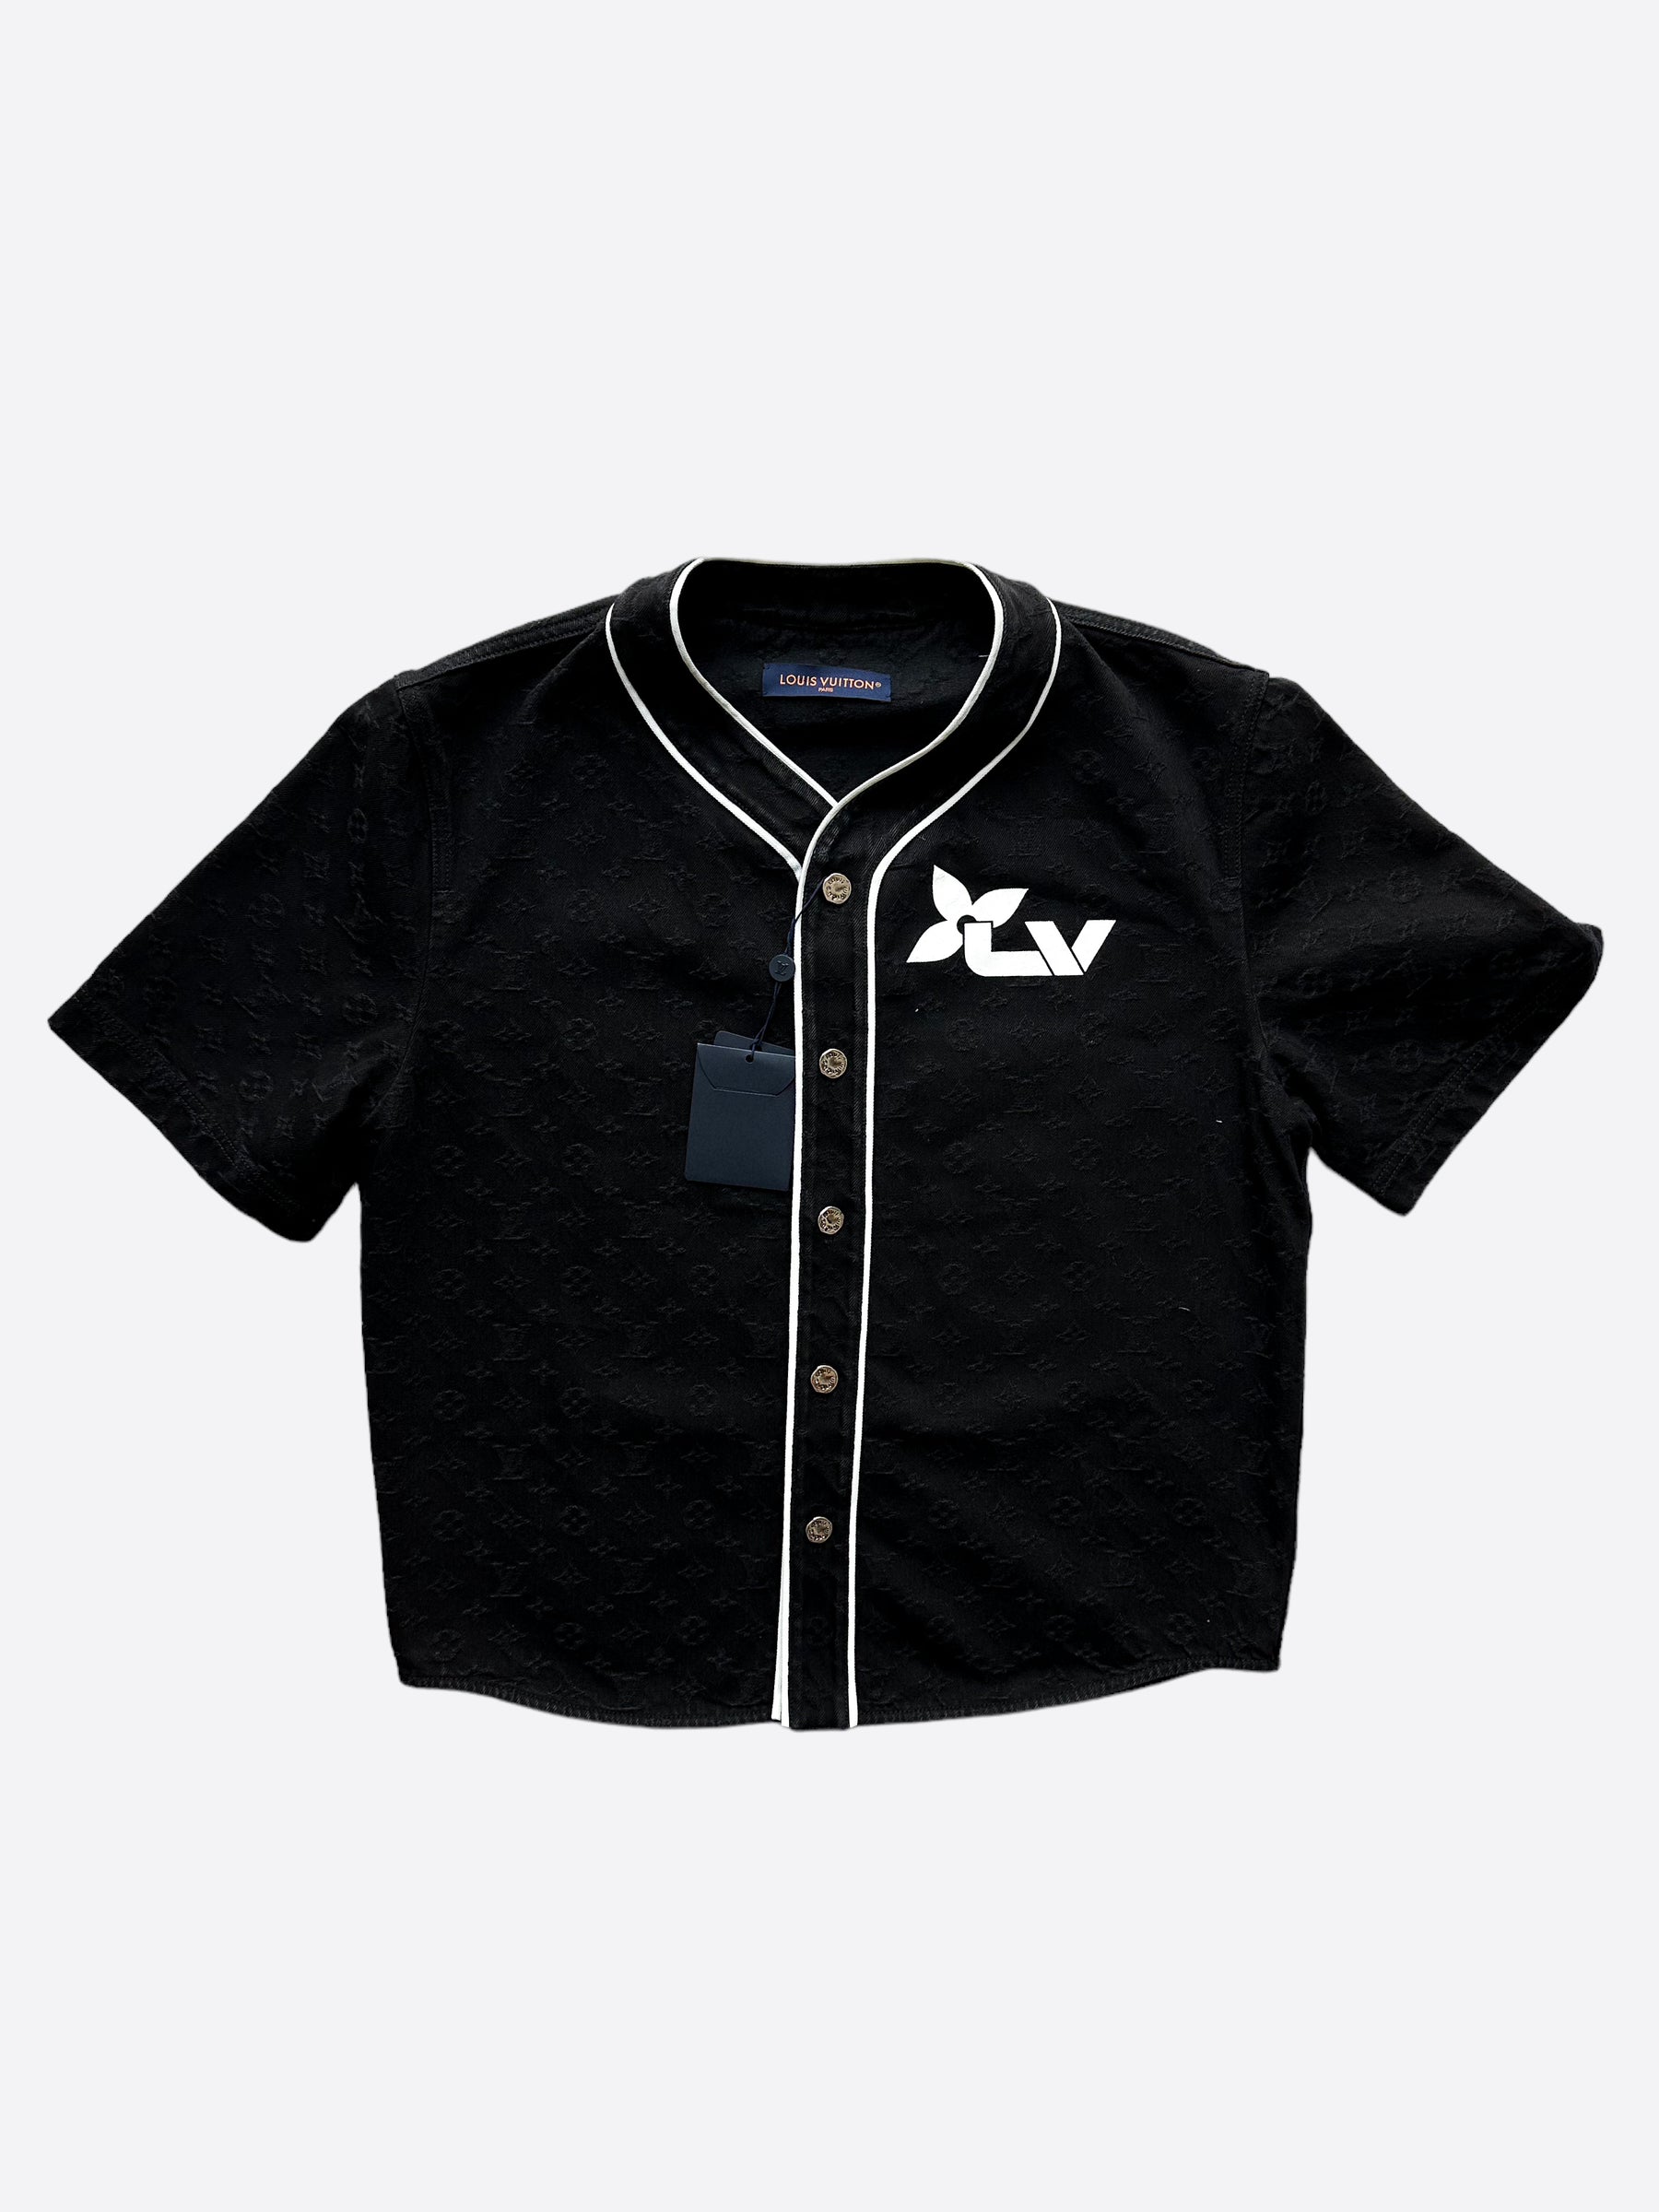 Louis vuitton black baseball jersey luxury shirt